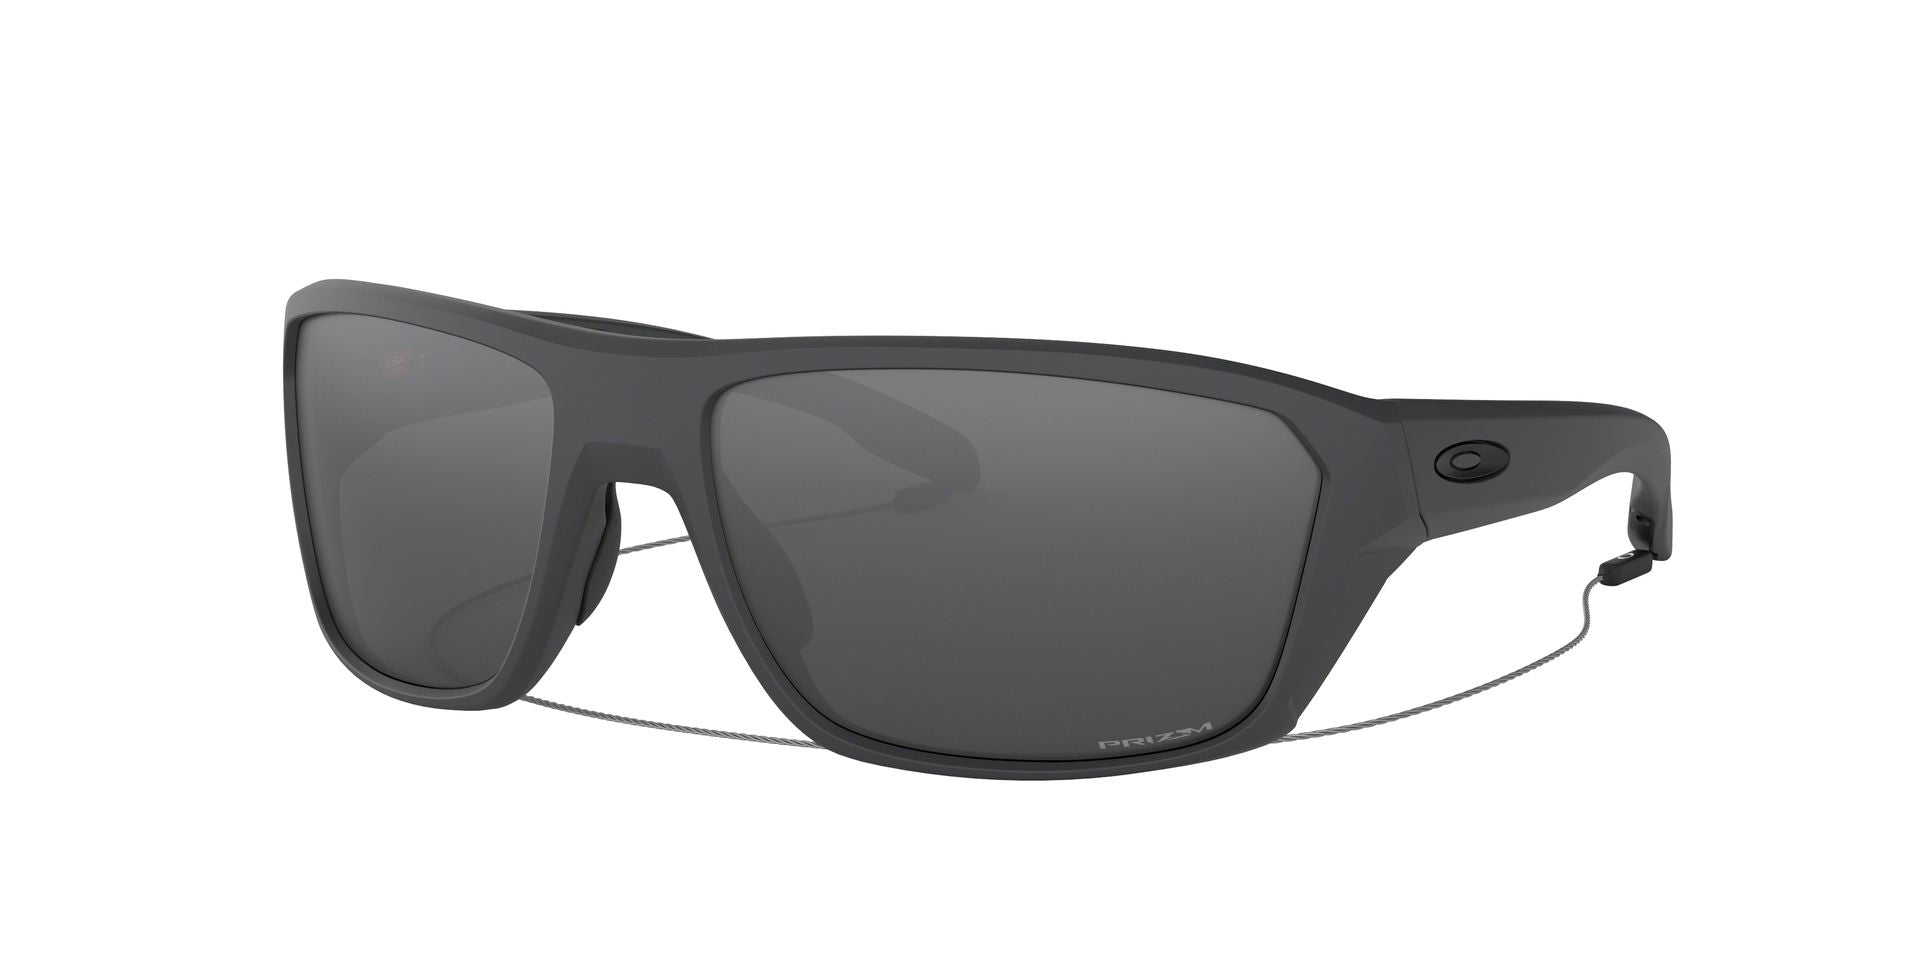 Oakley sunglasses OO9416 Split Shot (26) matte black with prizm 24k  polarized lenses, 64mm - Walmart.com